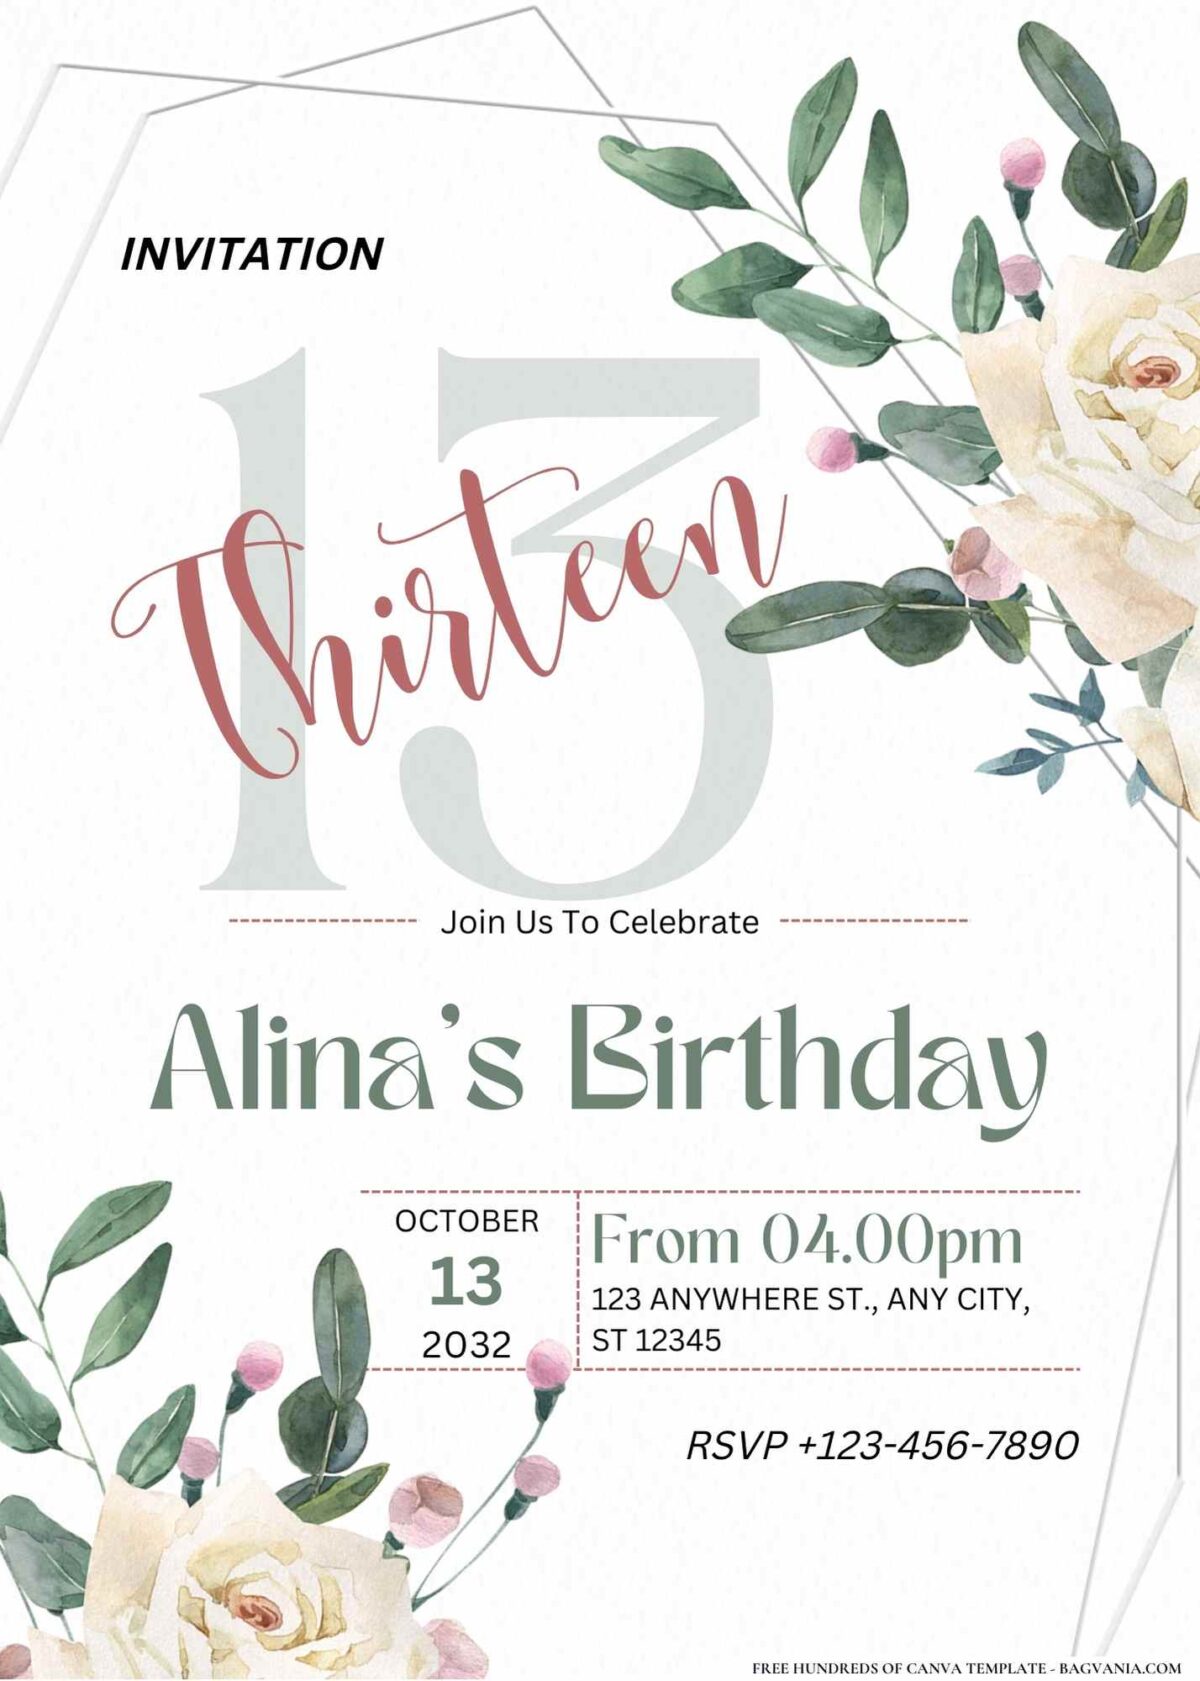 FREE Editable White Roses and Greenery Birthday Invitation